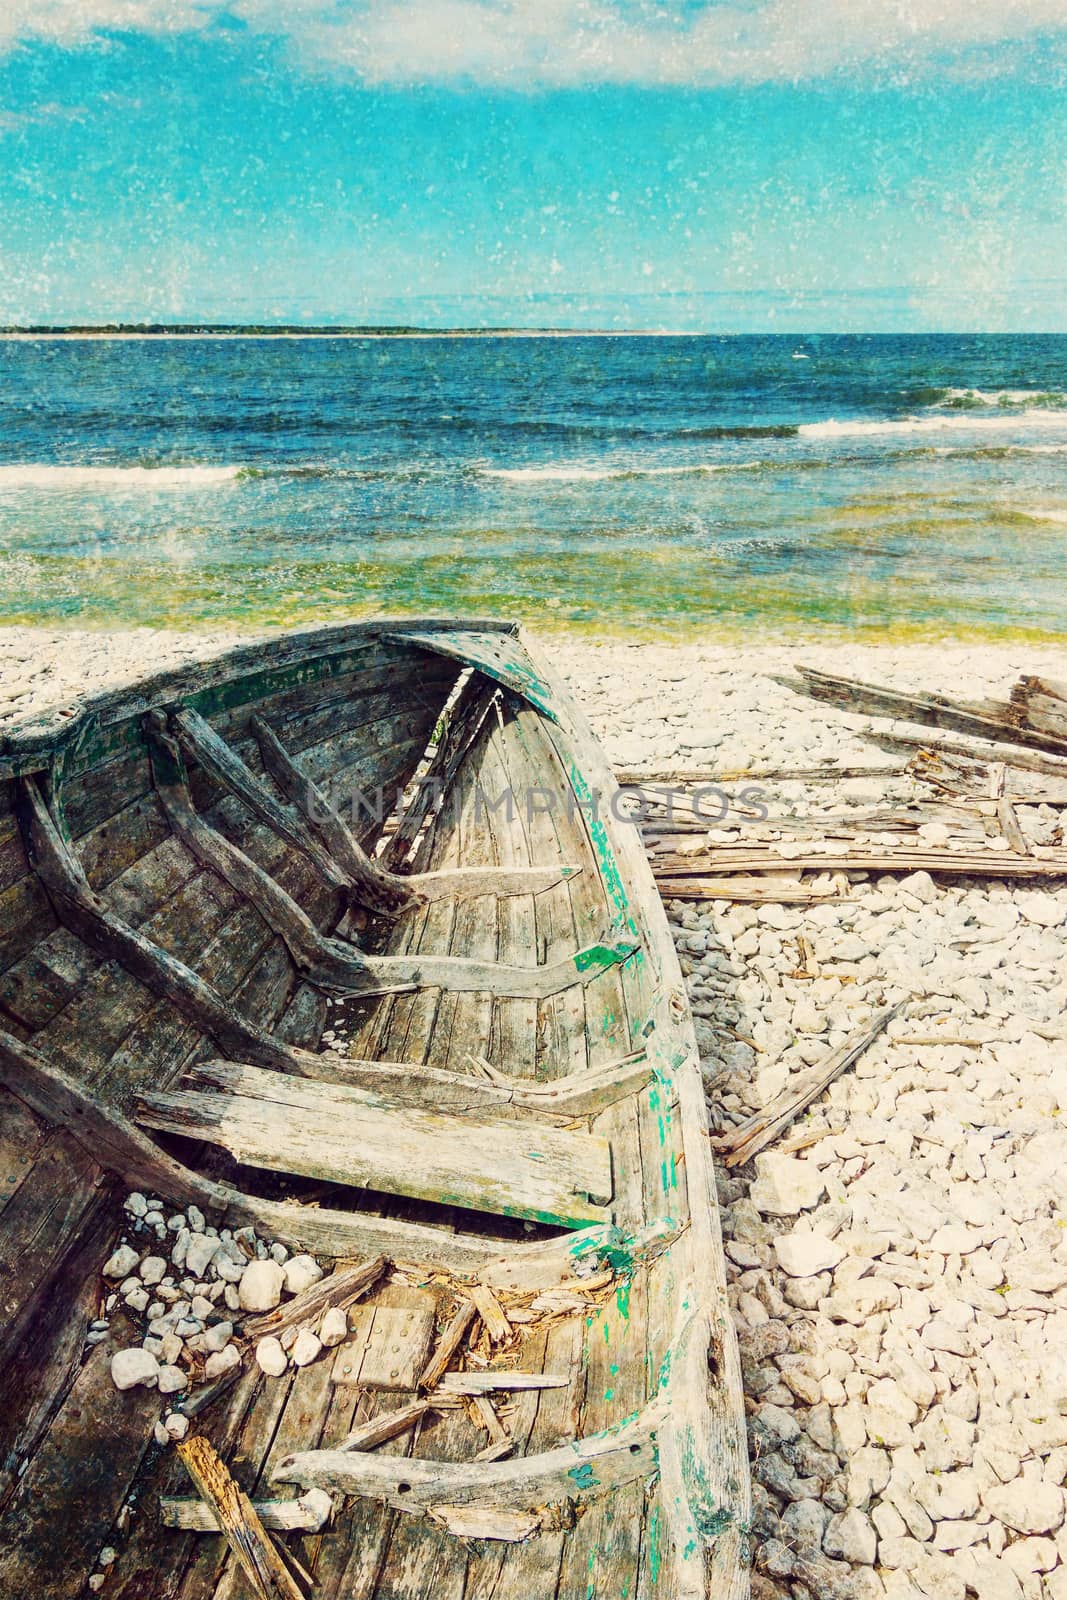 Old wooden boat on the seashore, retro image by anikasalsera